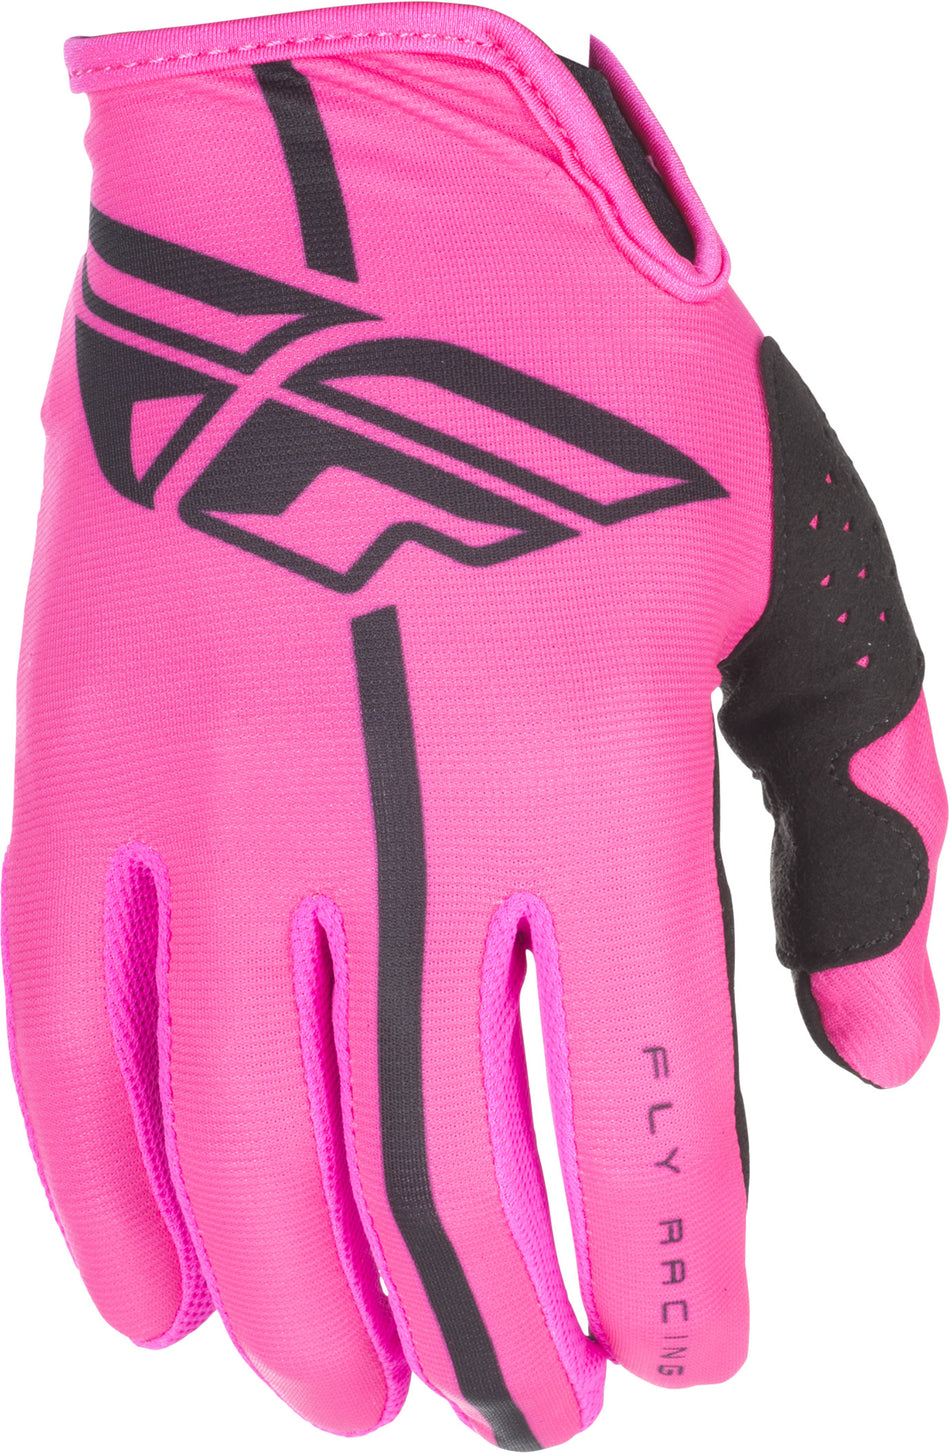 FLY RACING Lite Gloves Neon Pink/Black Sz 9 371-01709